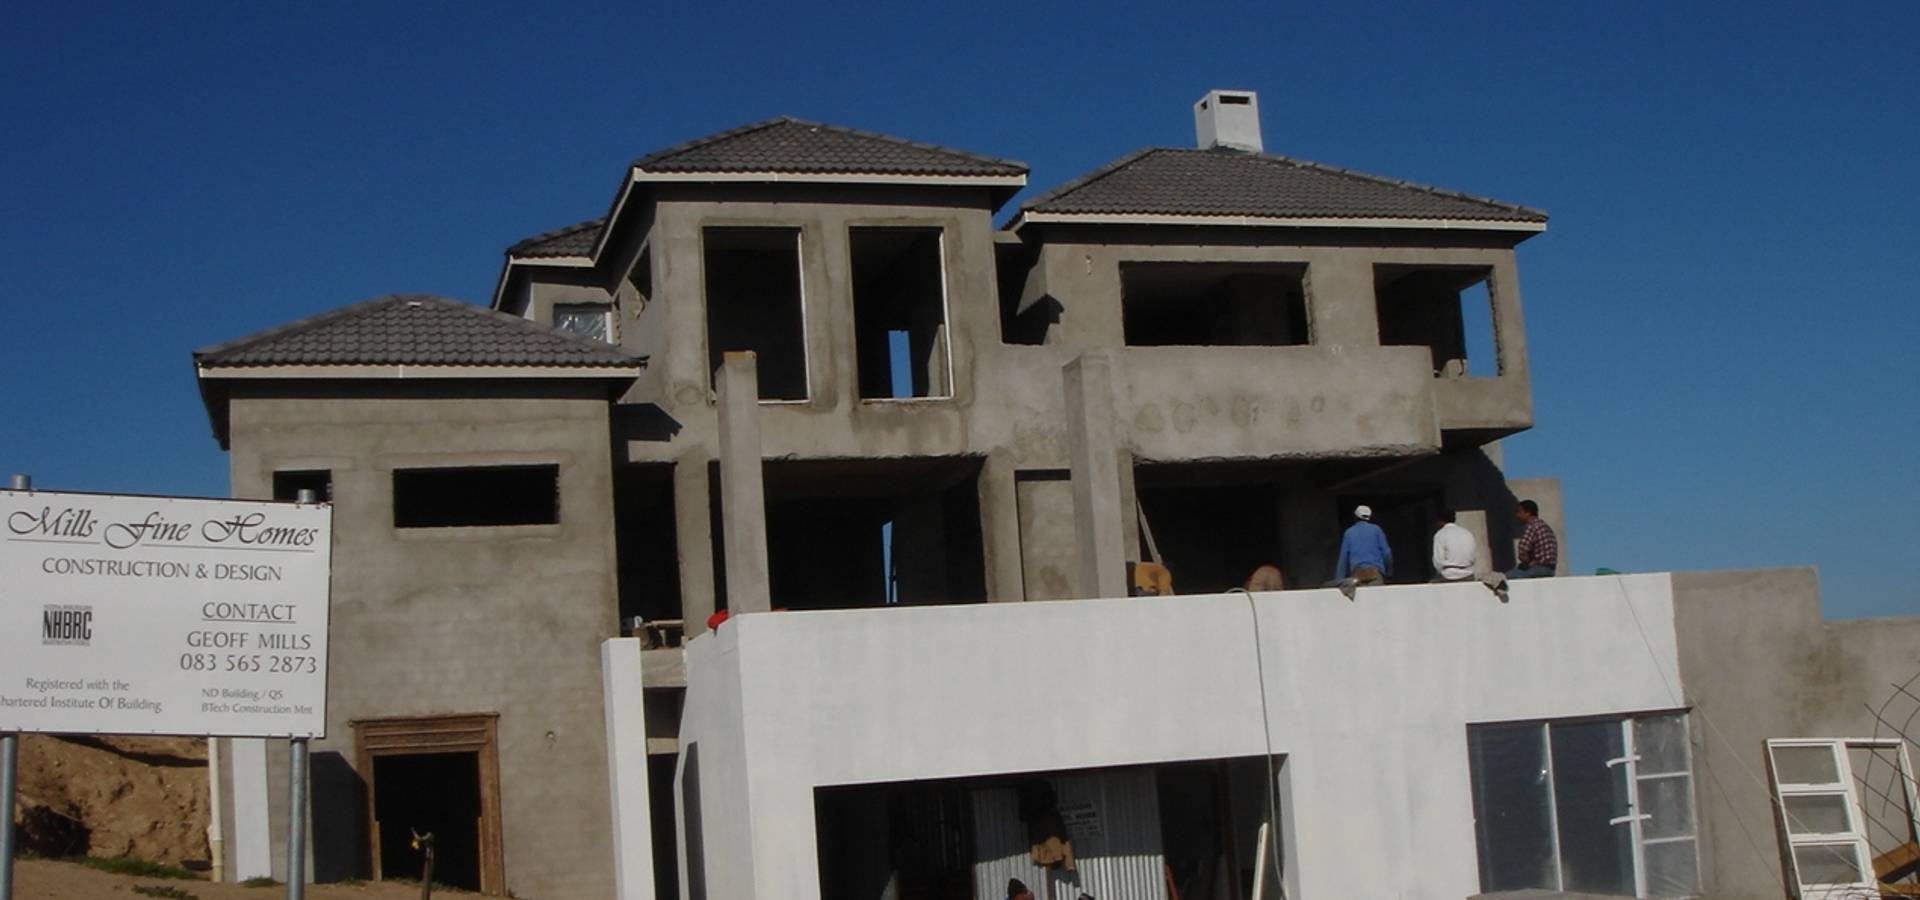 Mills Fine Homes – Construction . Project Management . Design